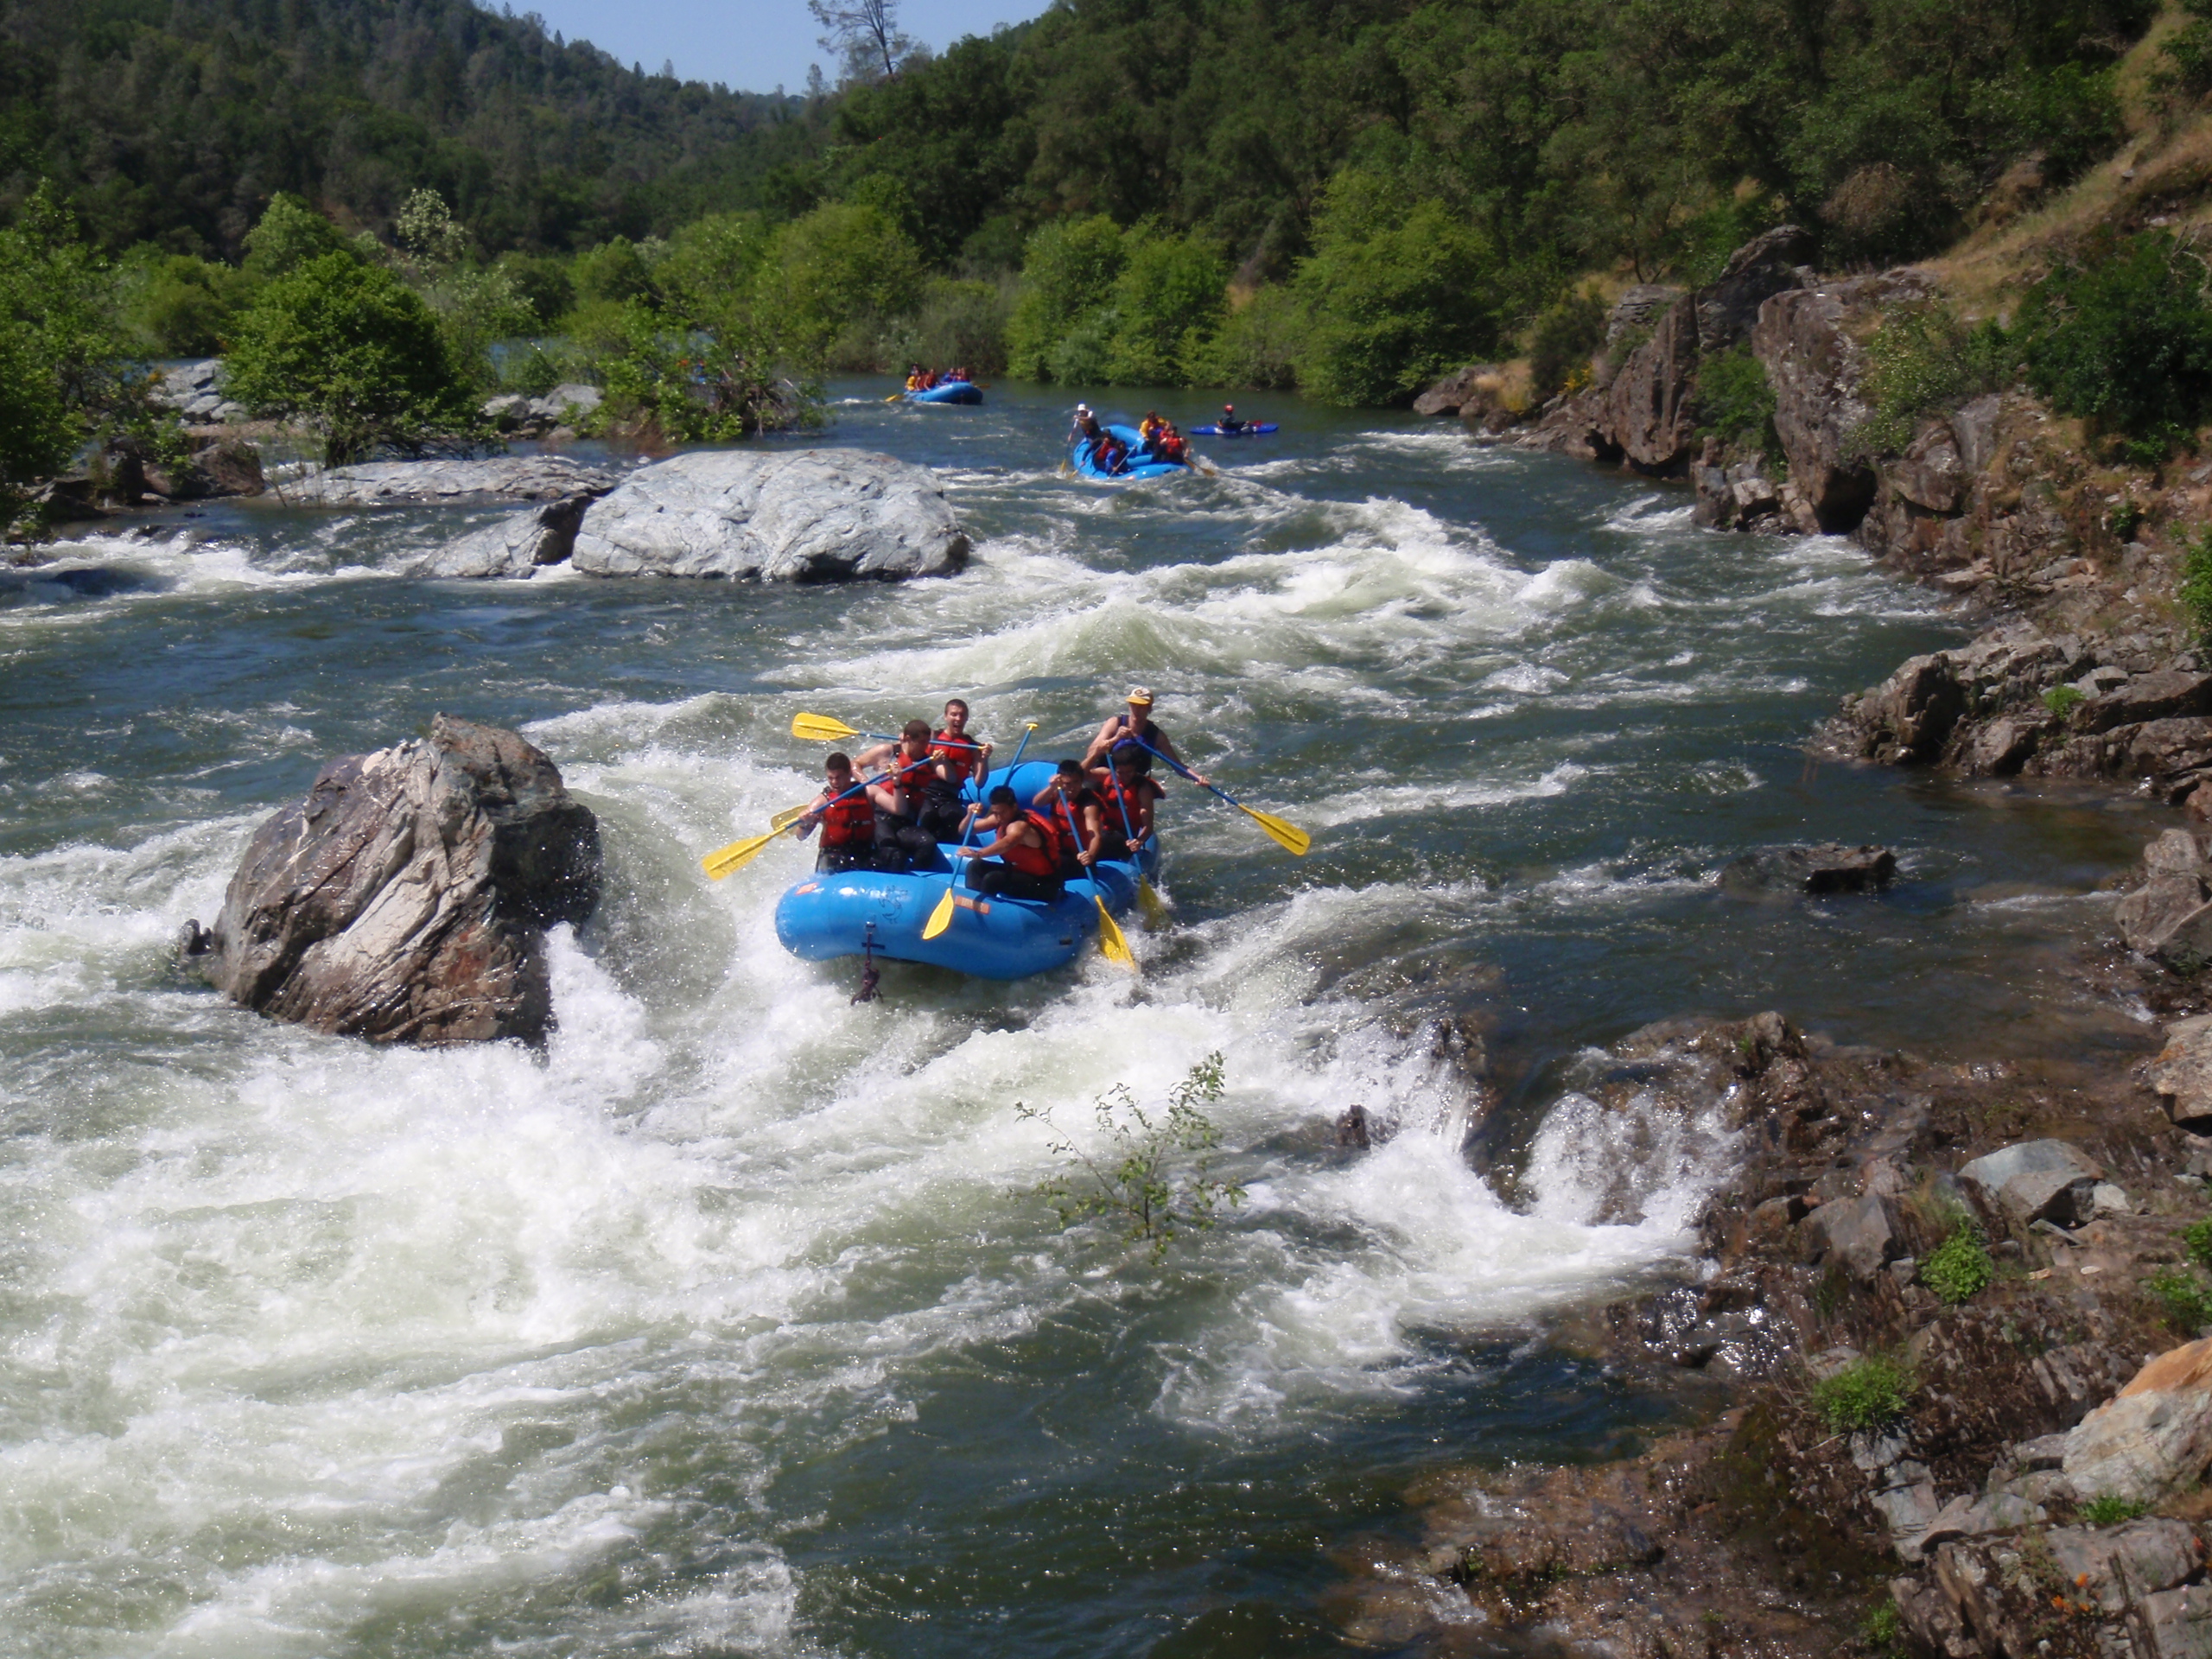 Groups rafting down river rapids